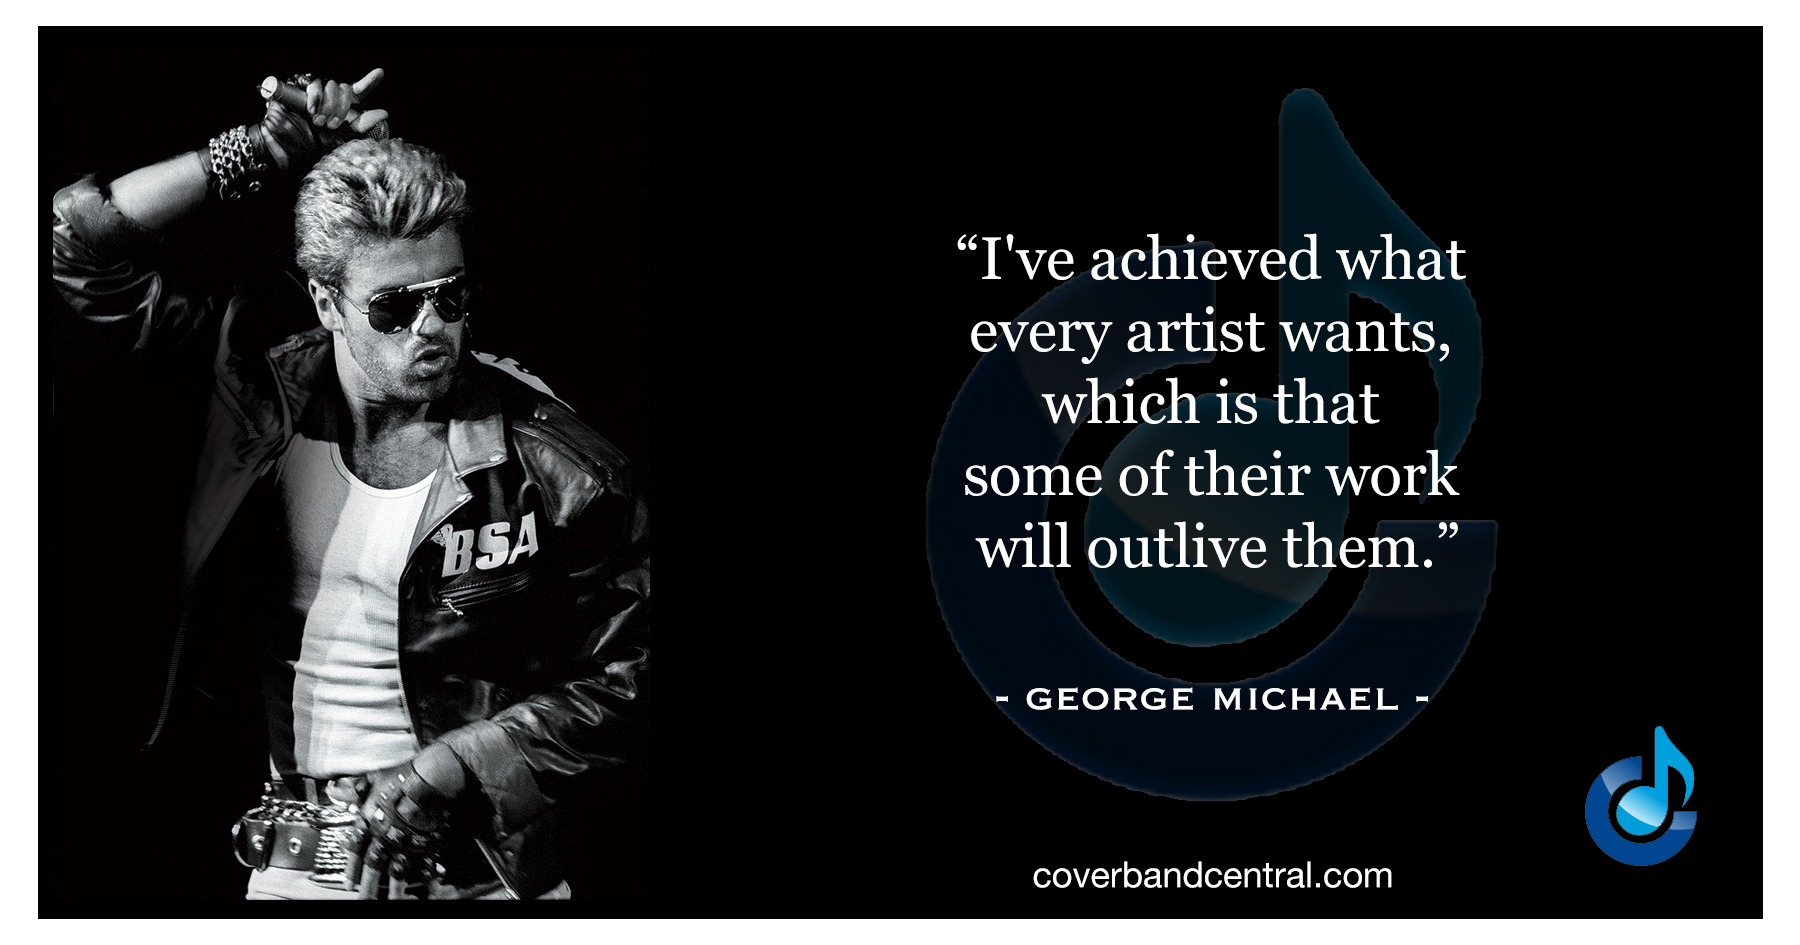 George Michael quote